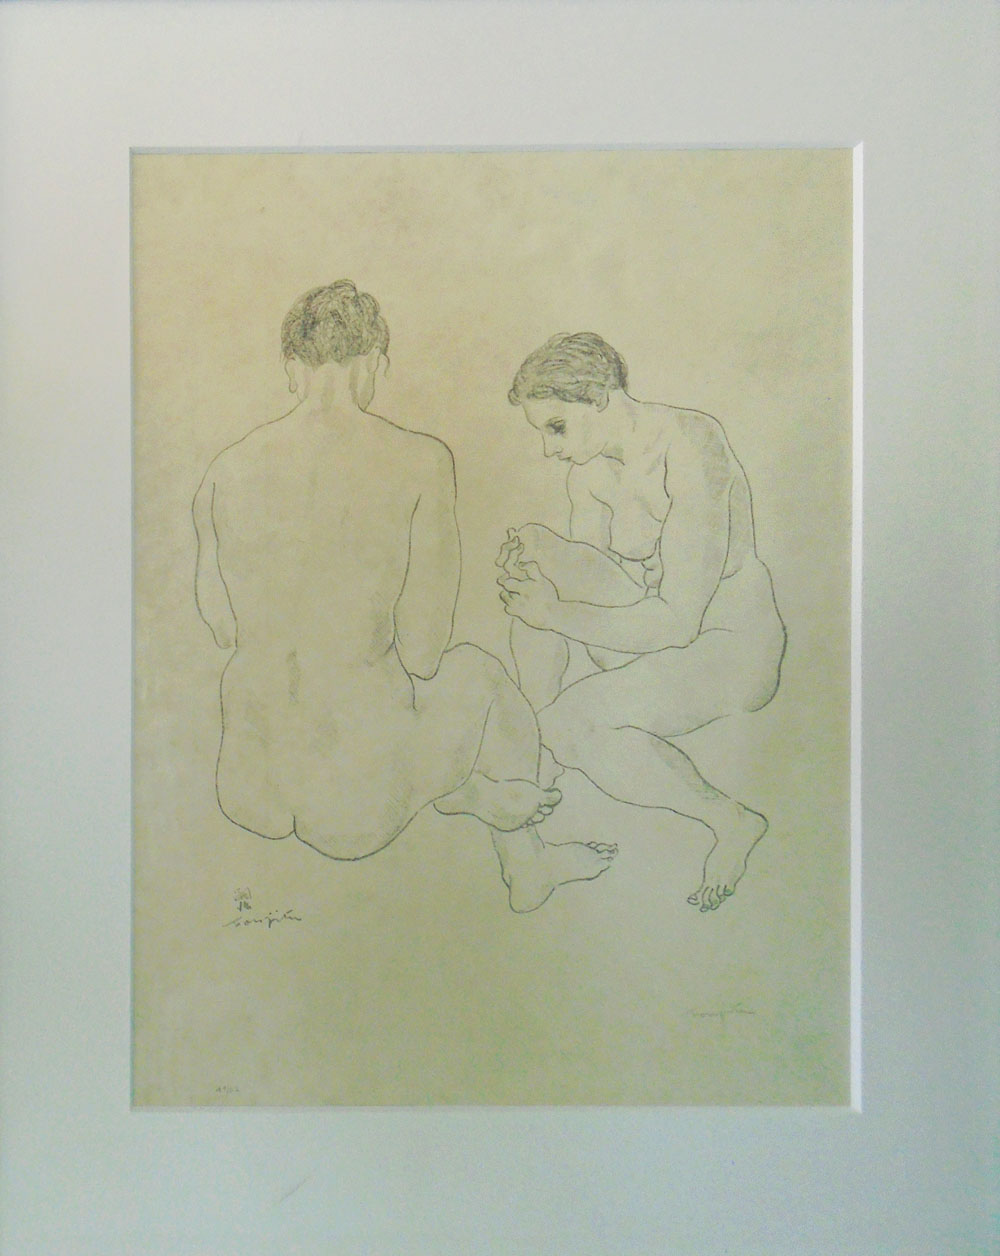 TSUGUHARU LEONARD FOUJITA (French-Japanese, 1886-1968), 'Etude de Nus' (S.